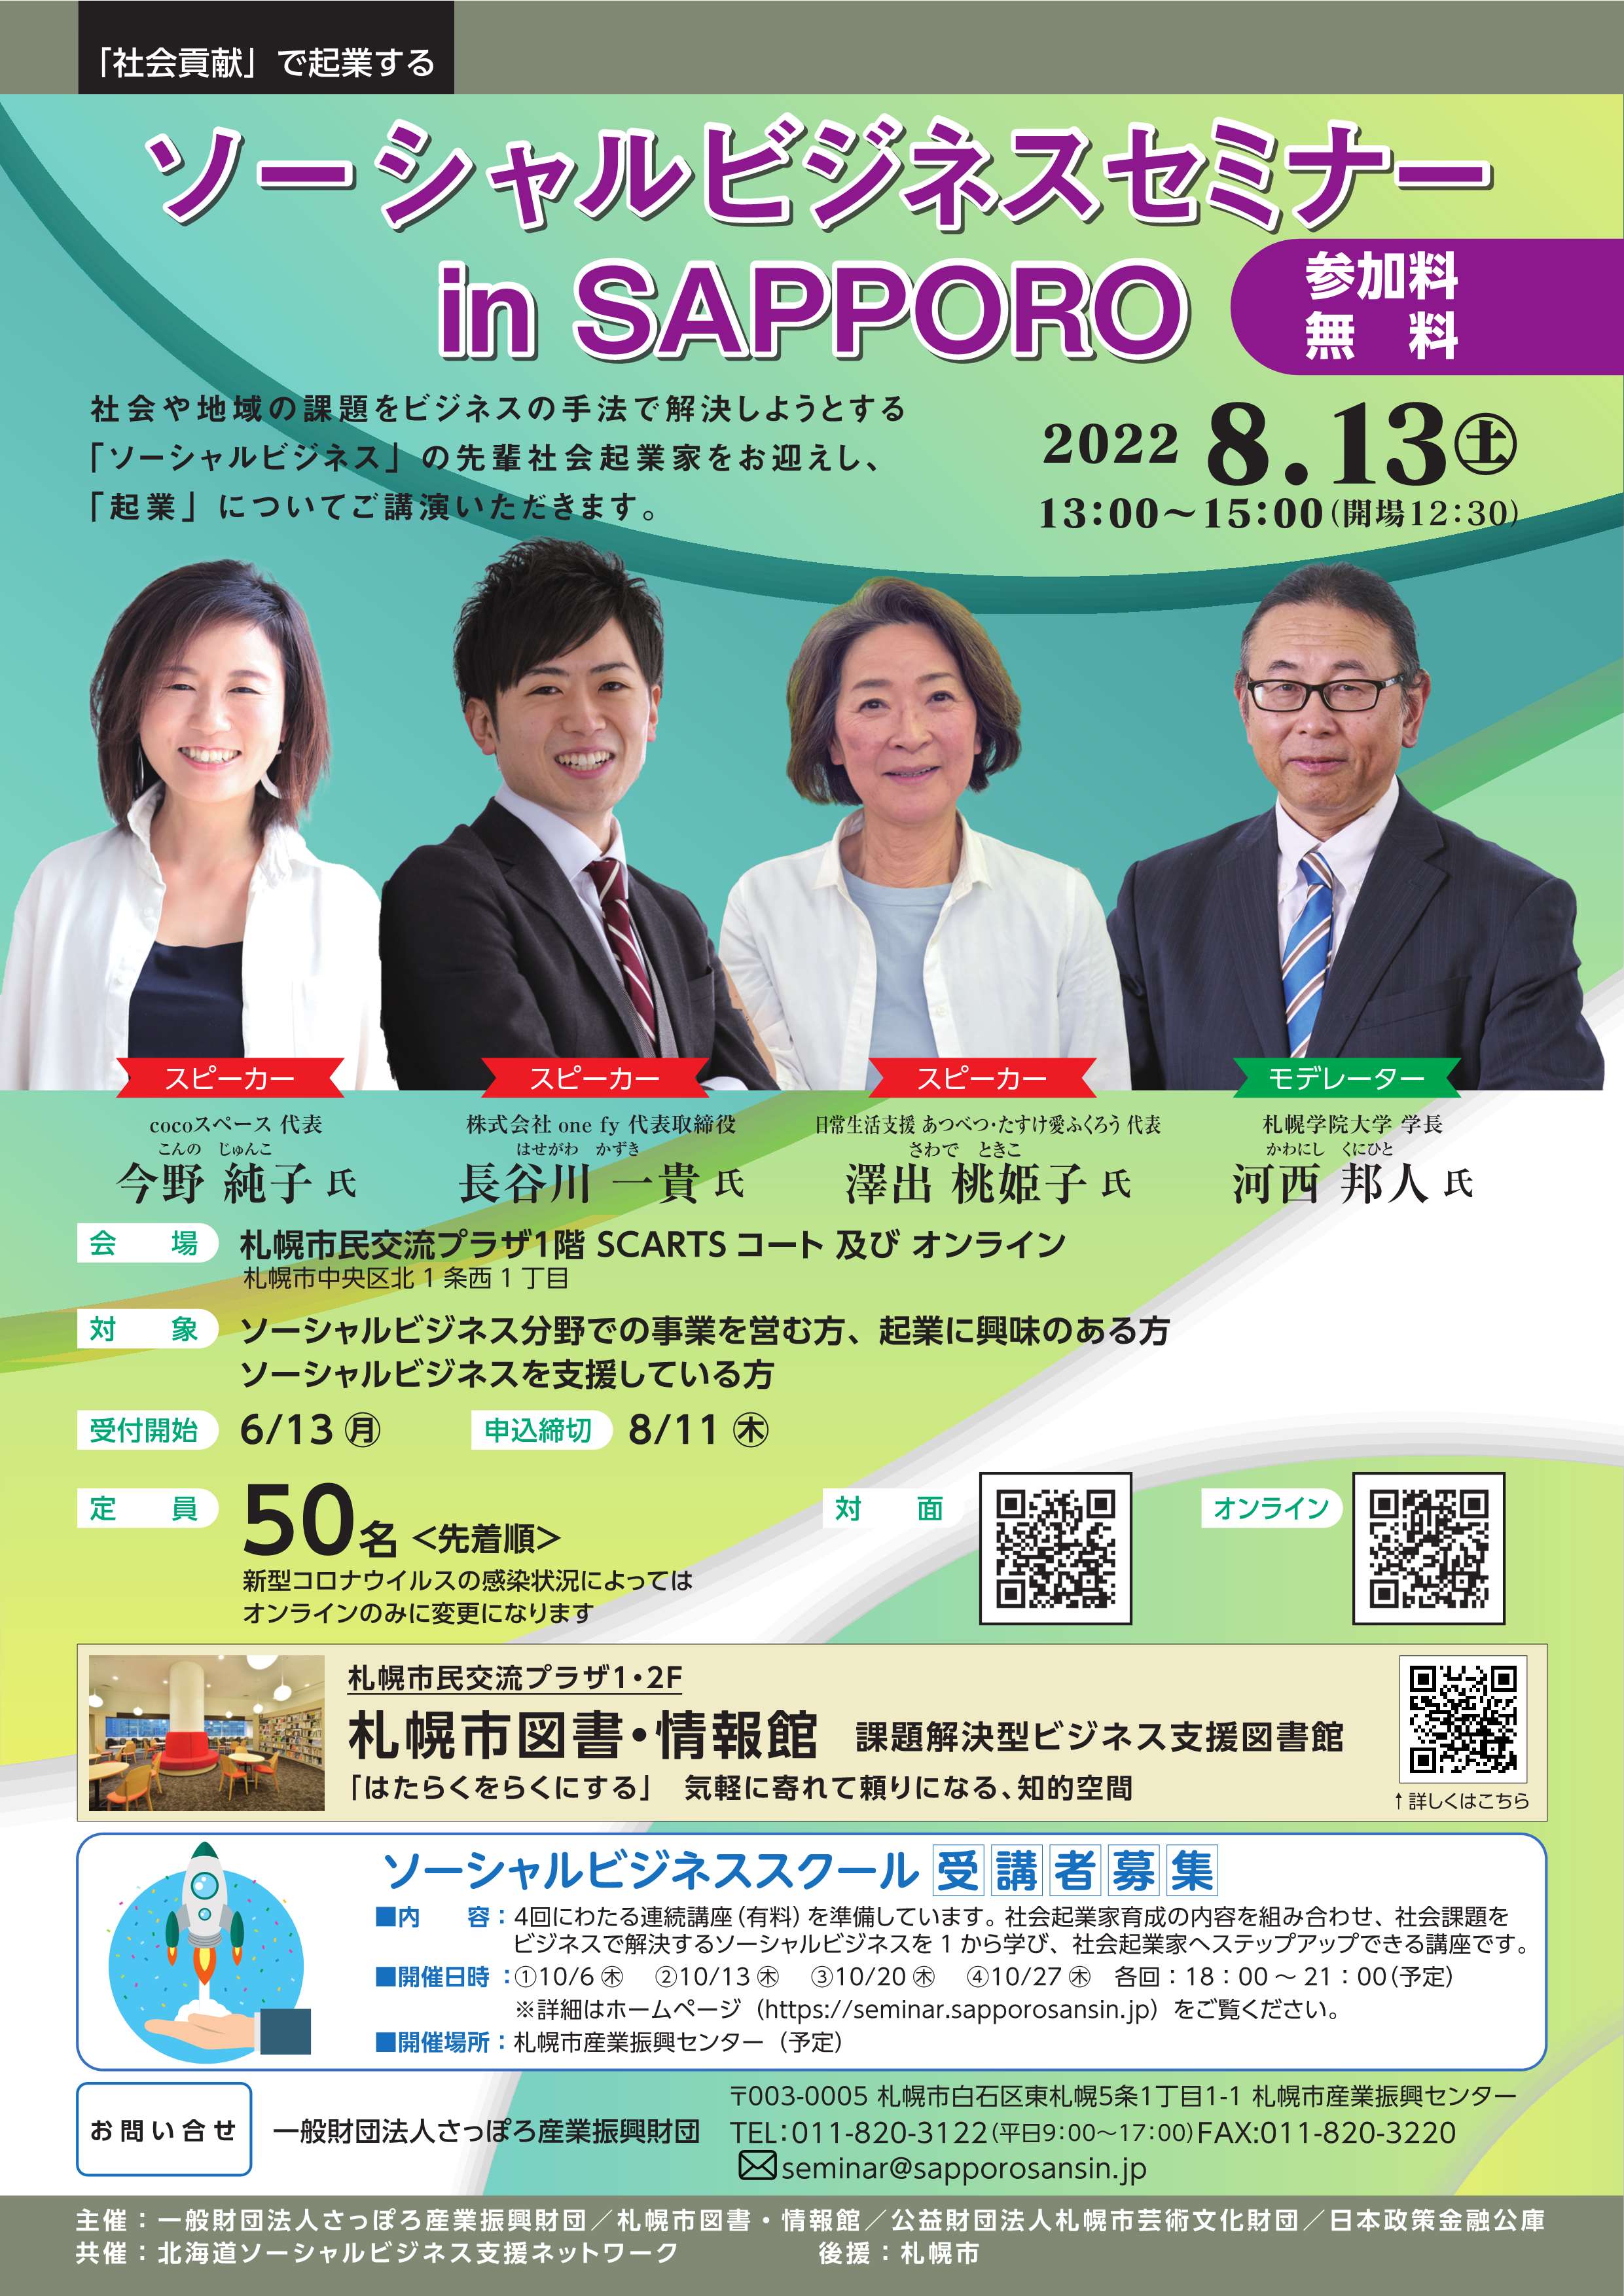 Social Business Seminar in Sapporo image